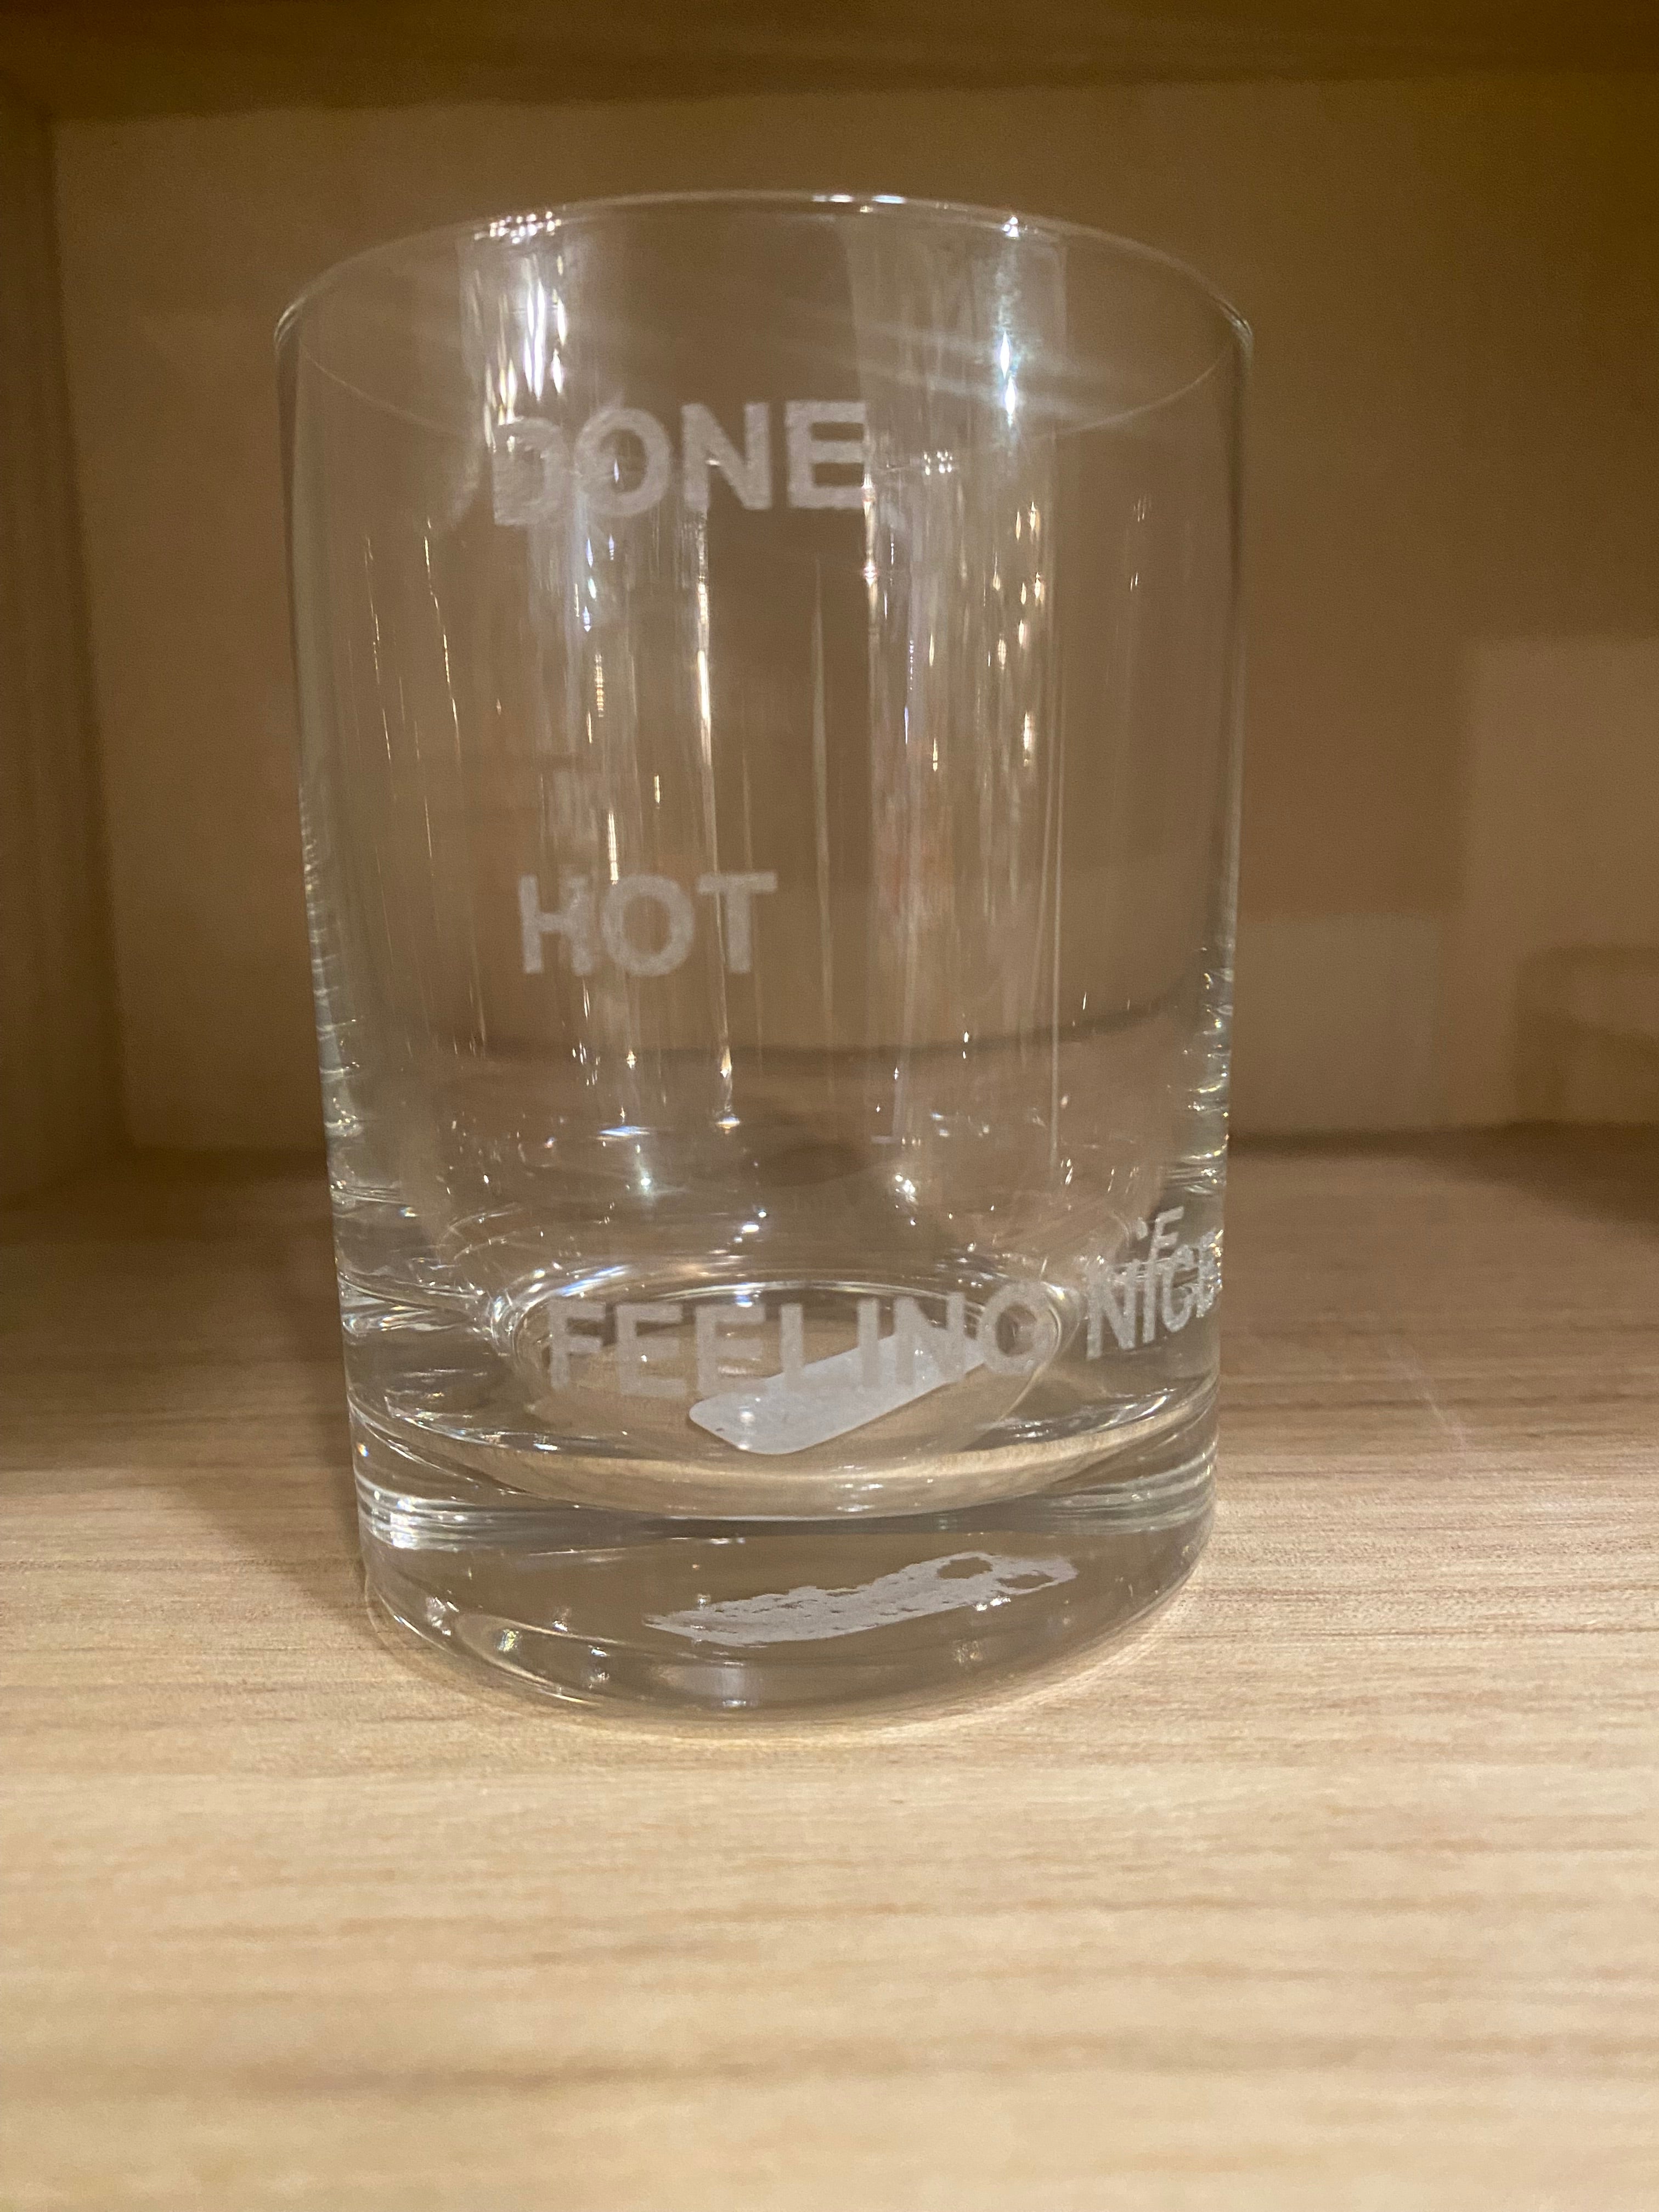 Done/Hot Feeling Nice Glass